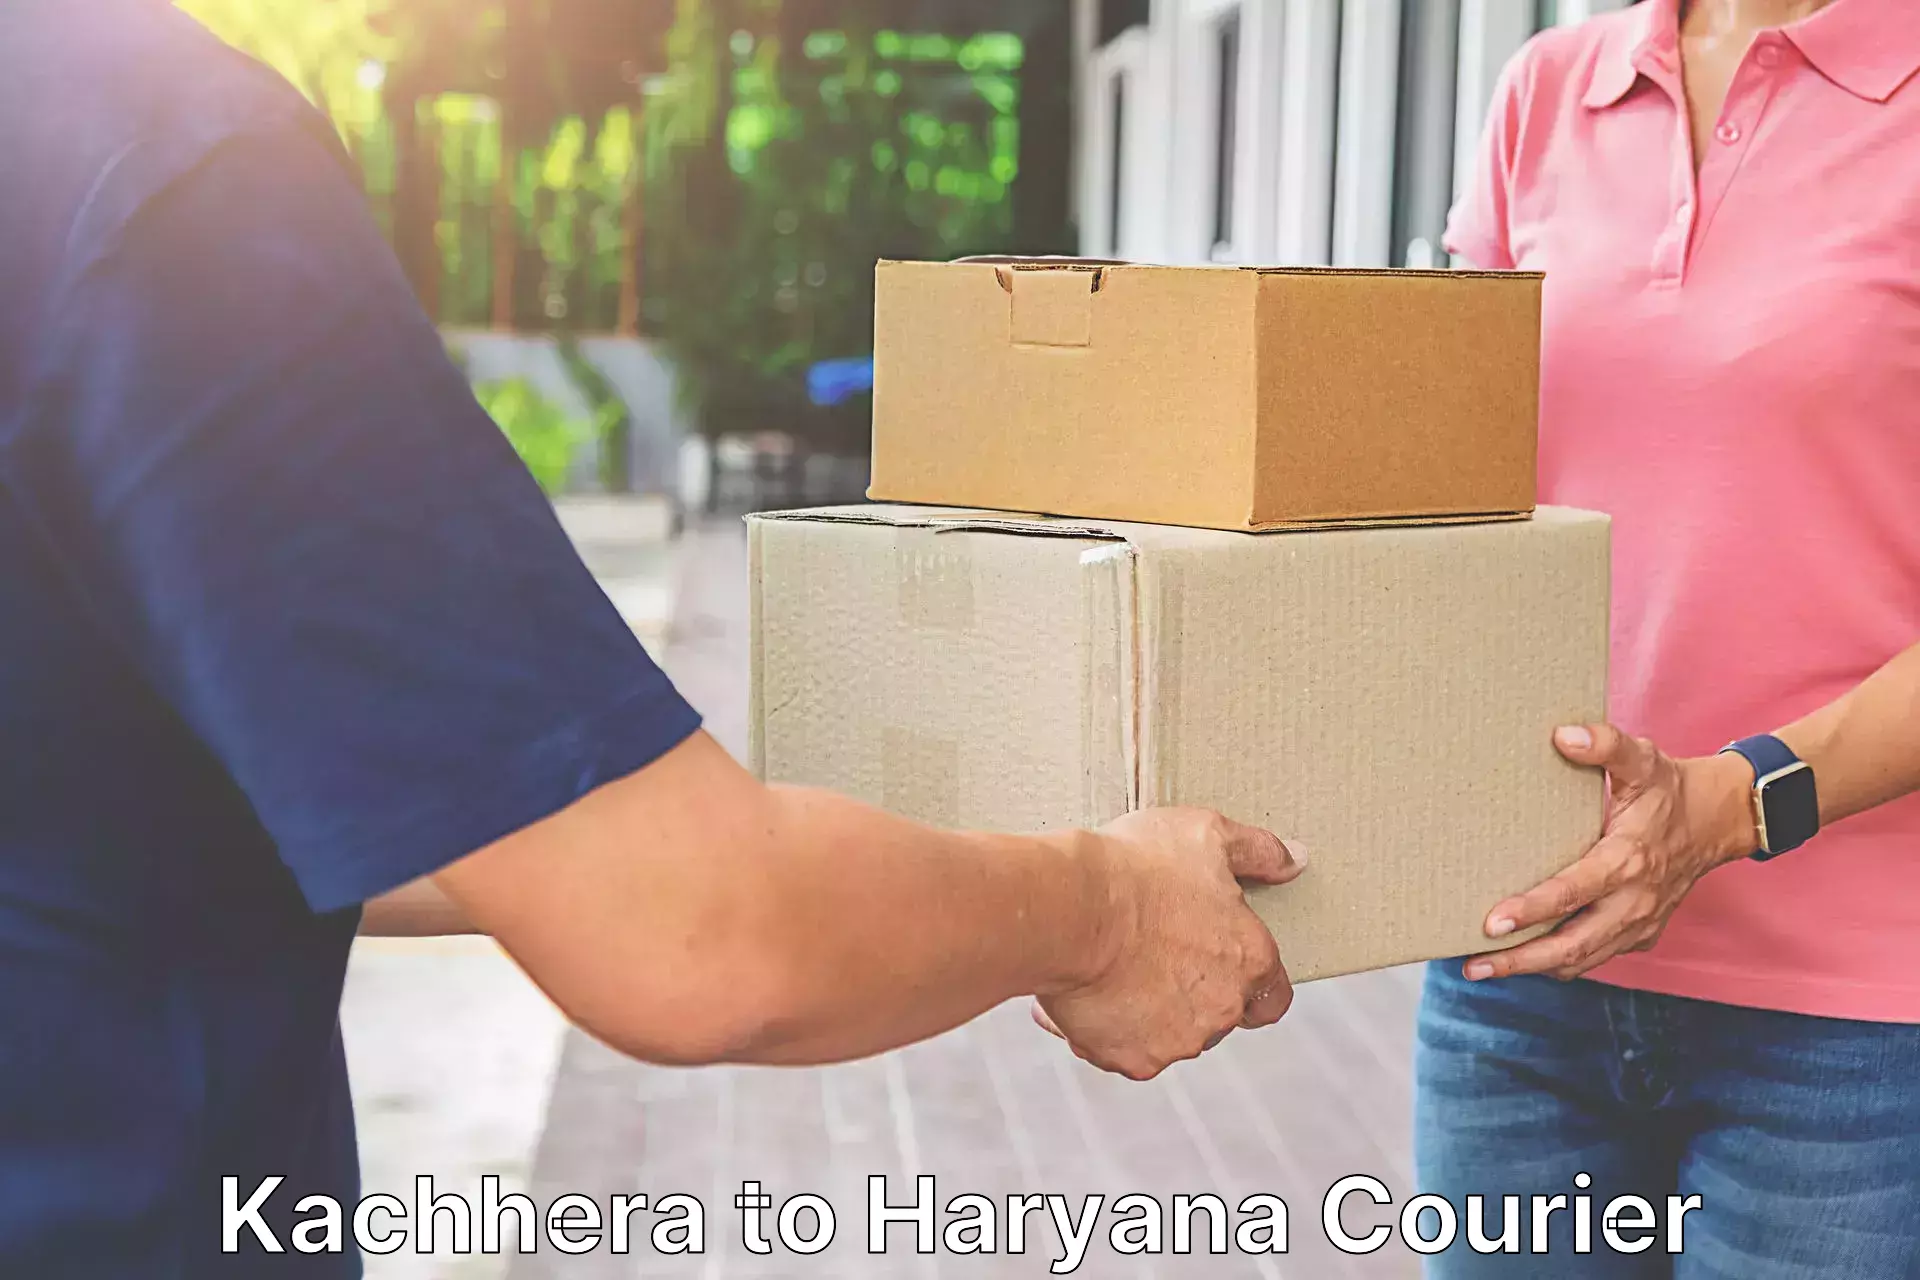 Courier service comparison Kachhera to Haryana